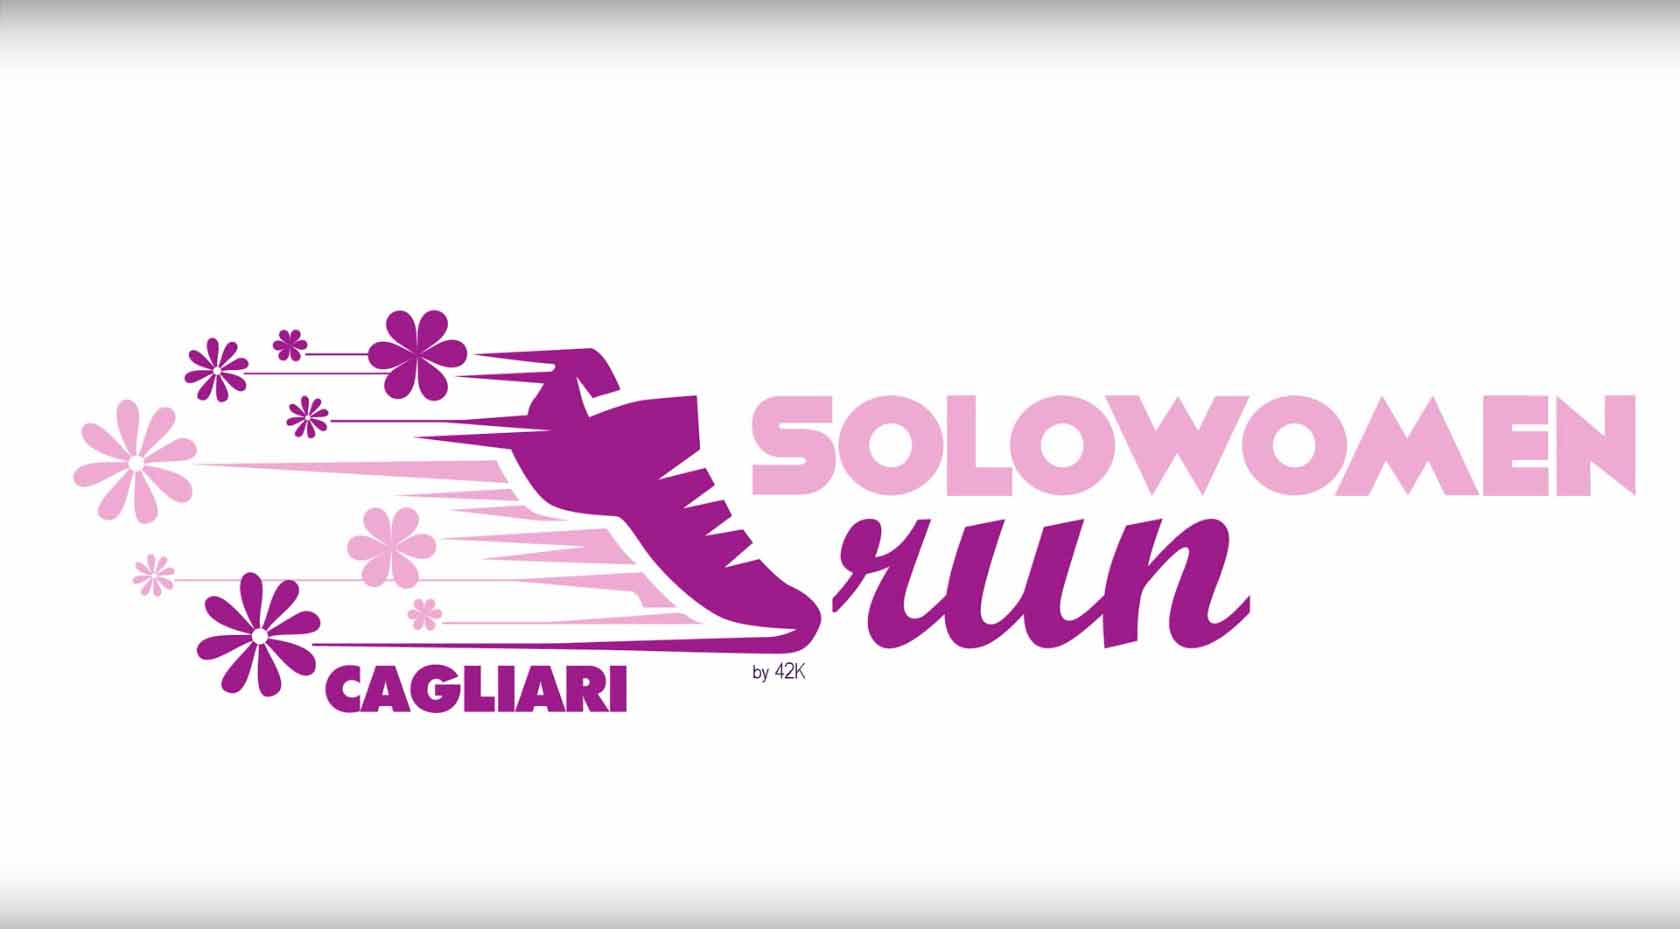 Maratona womenrun cagliari 2015